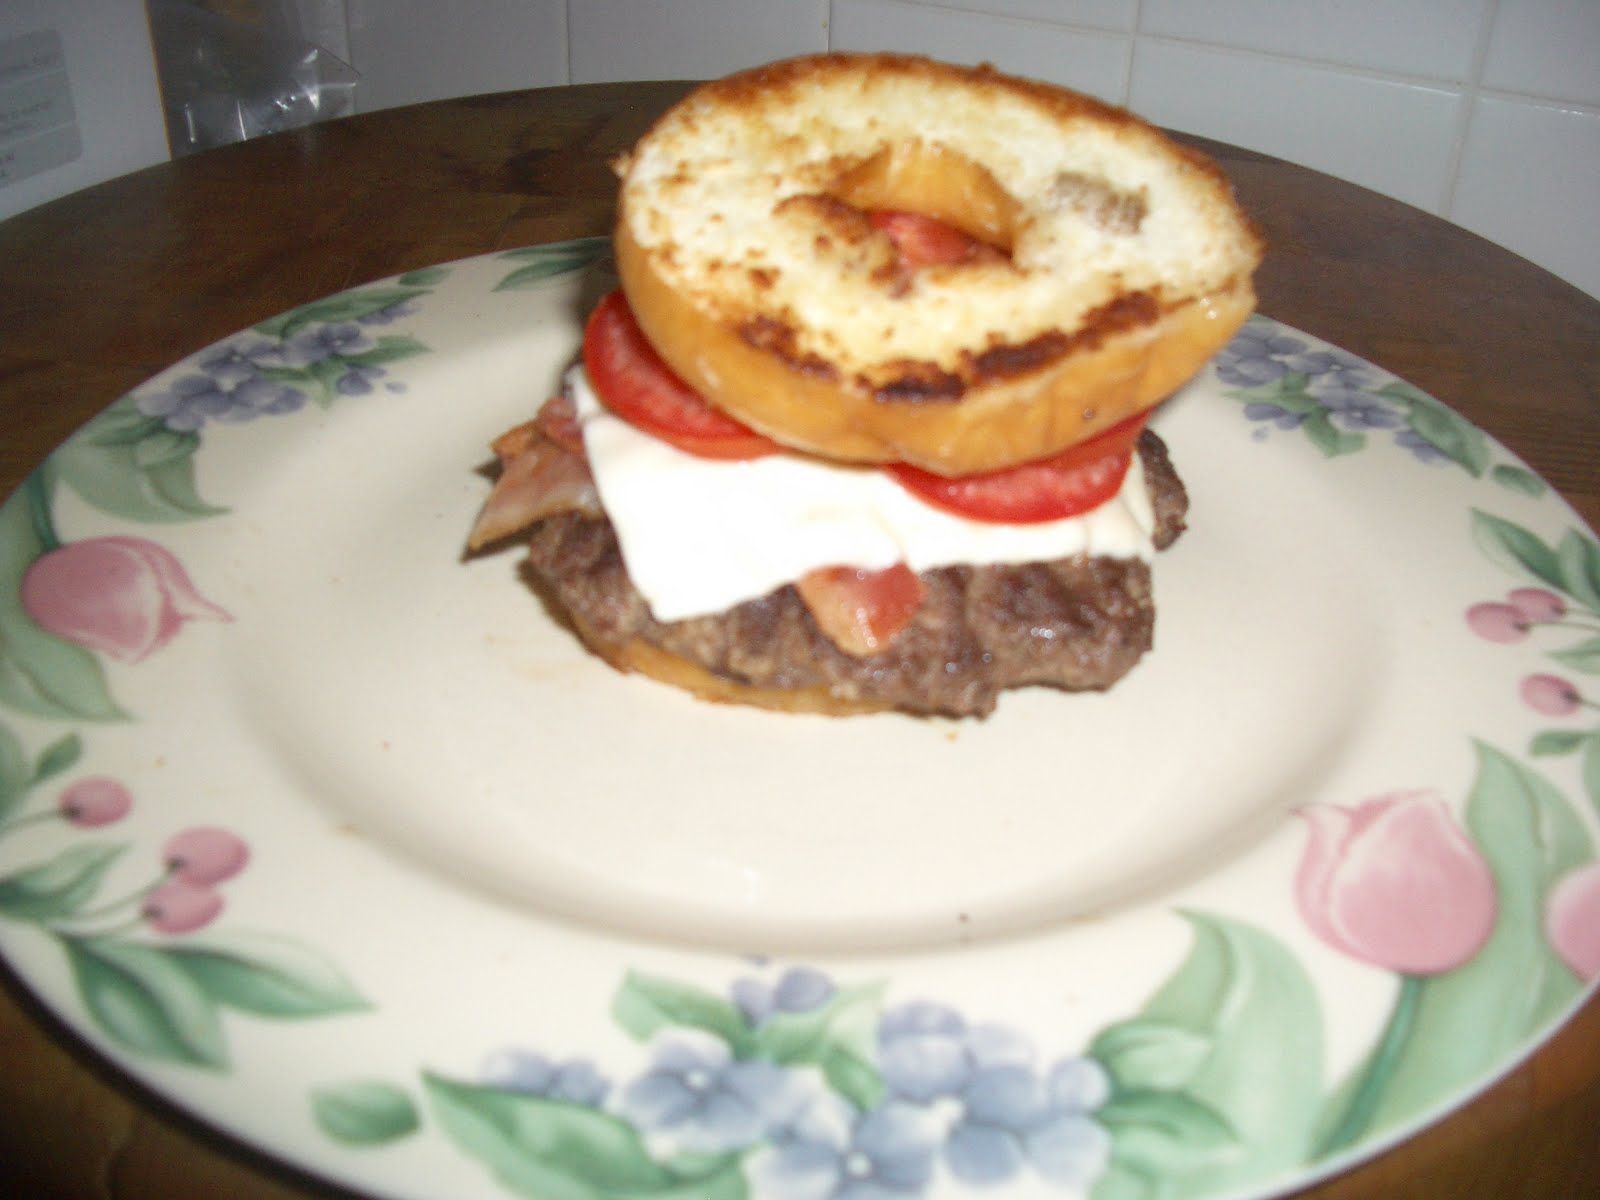 Chef Dad Omaha: RECIPE - Glazed Donut Burger